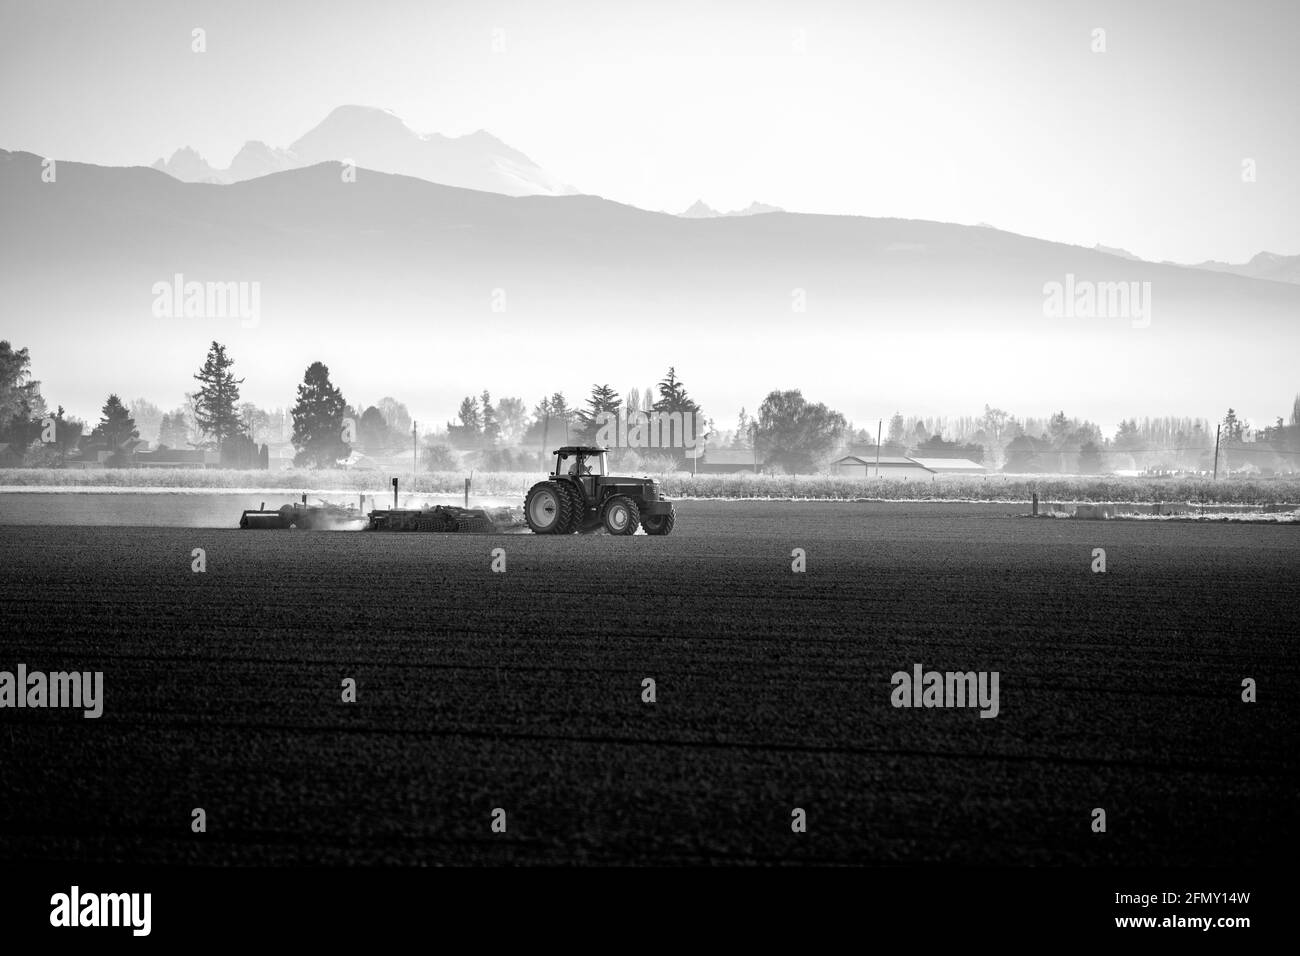 WA20192-00-BW...... WASHINGTON - Traktor pflügt ein Feld im Skagit Valley. Stockfoto